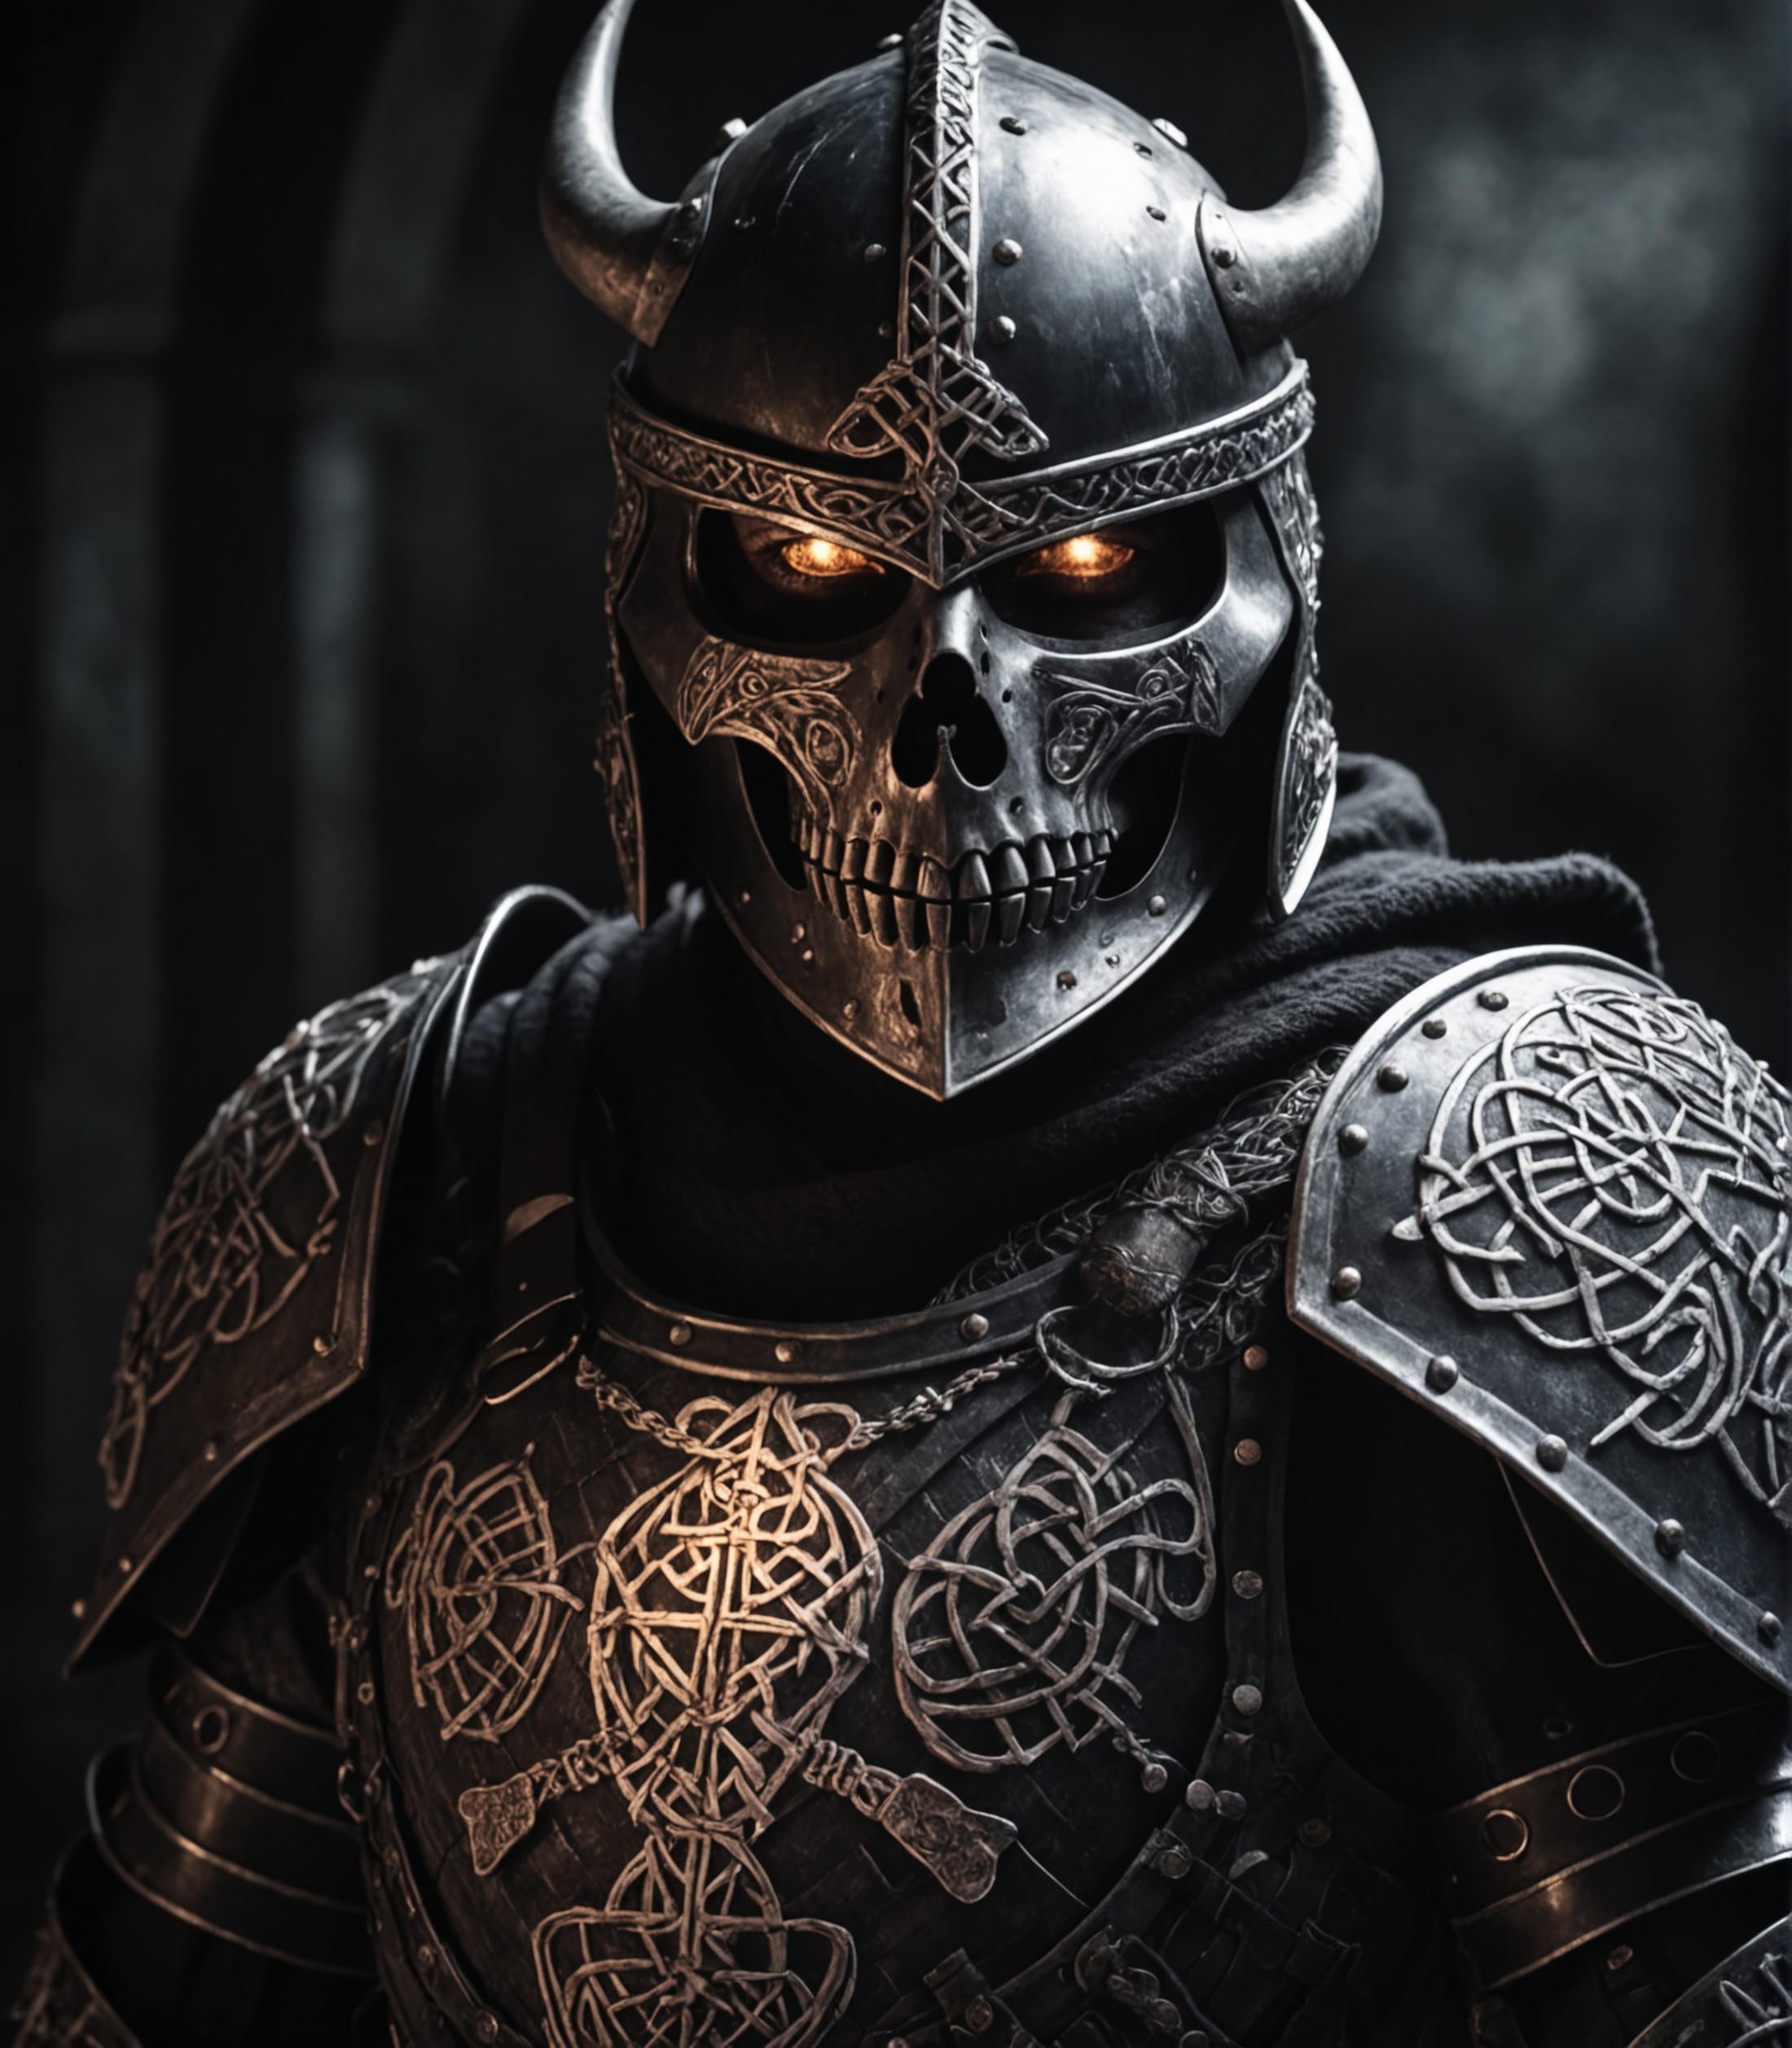 dark skeleton knight, black helmet, armor, awardwinning photo, face portrait, close up, glowing runes, viking knotwork